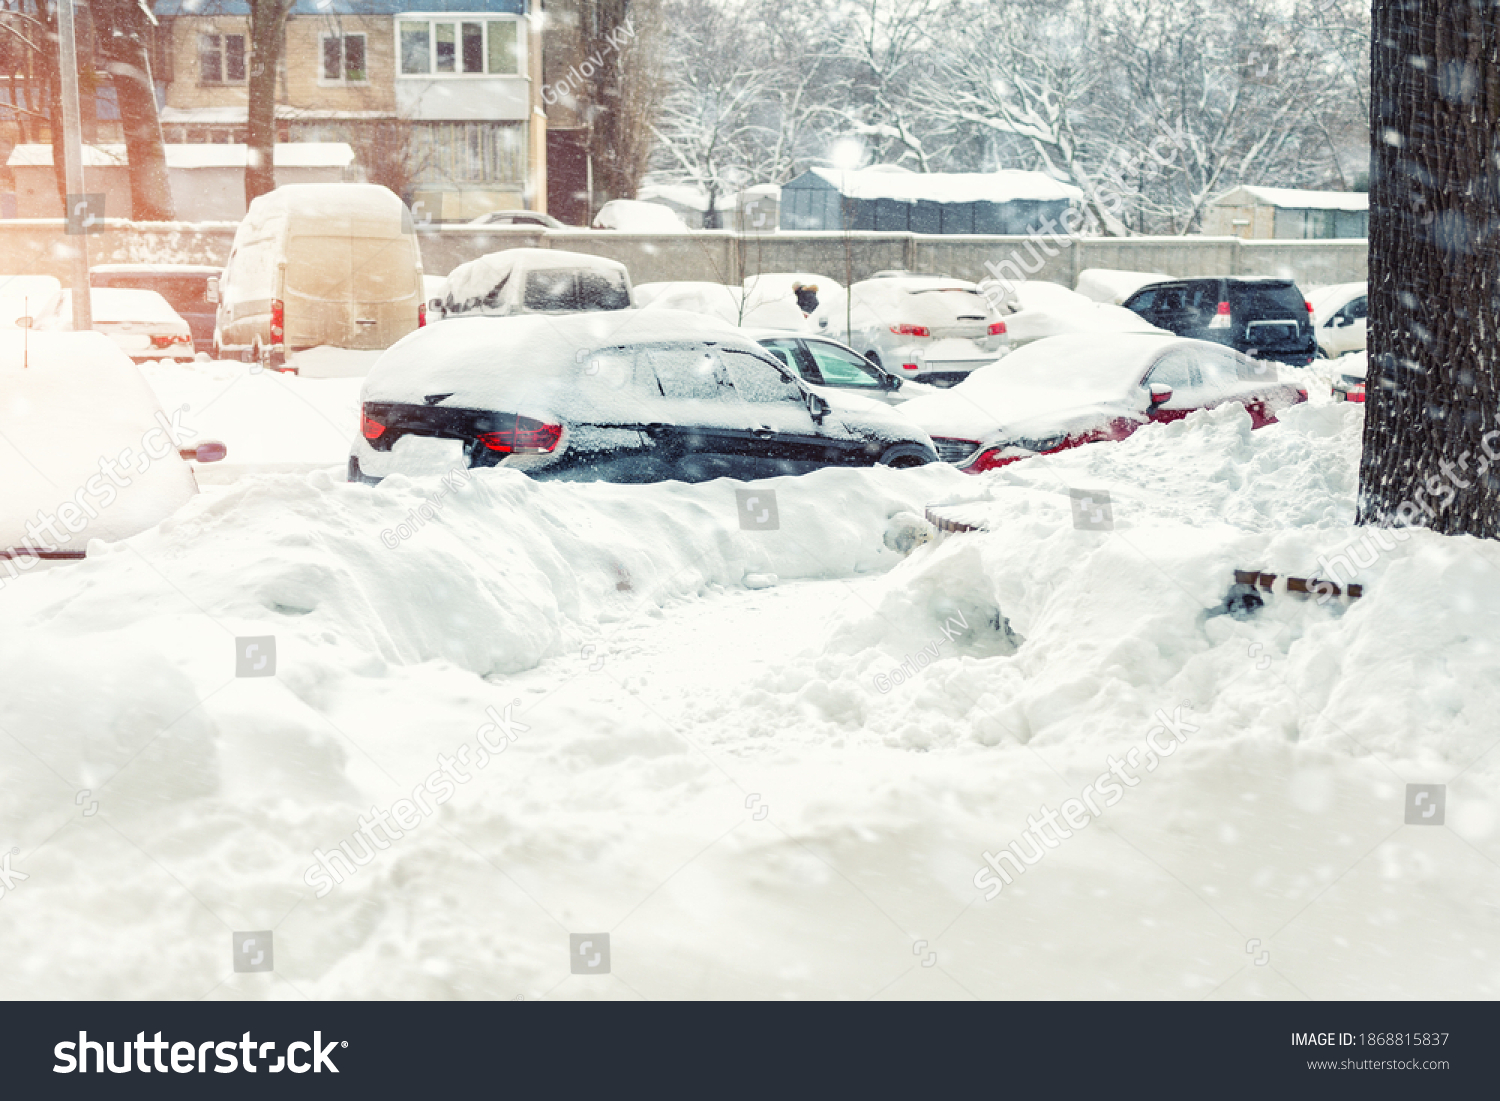 42,559 Snowdrift road Images, Stock Photos & Vectors | Shutterstock